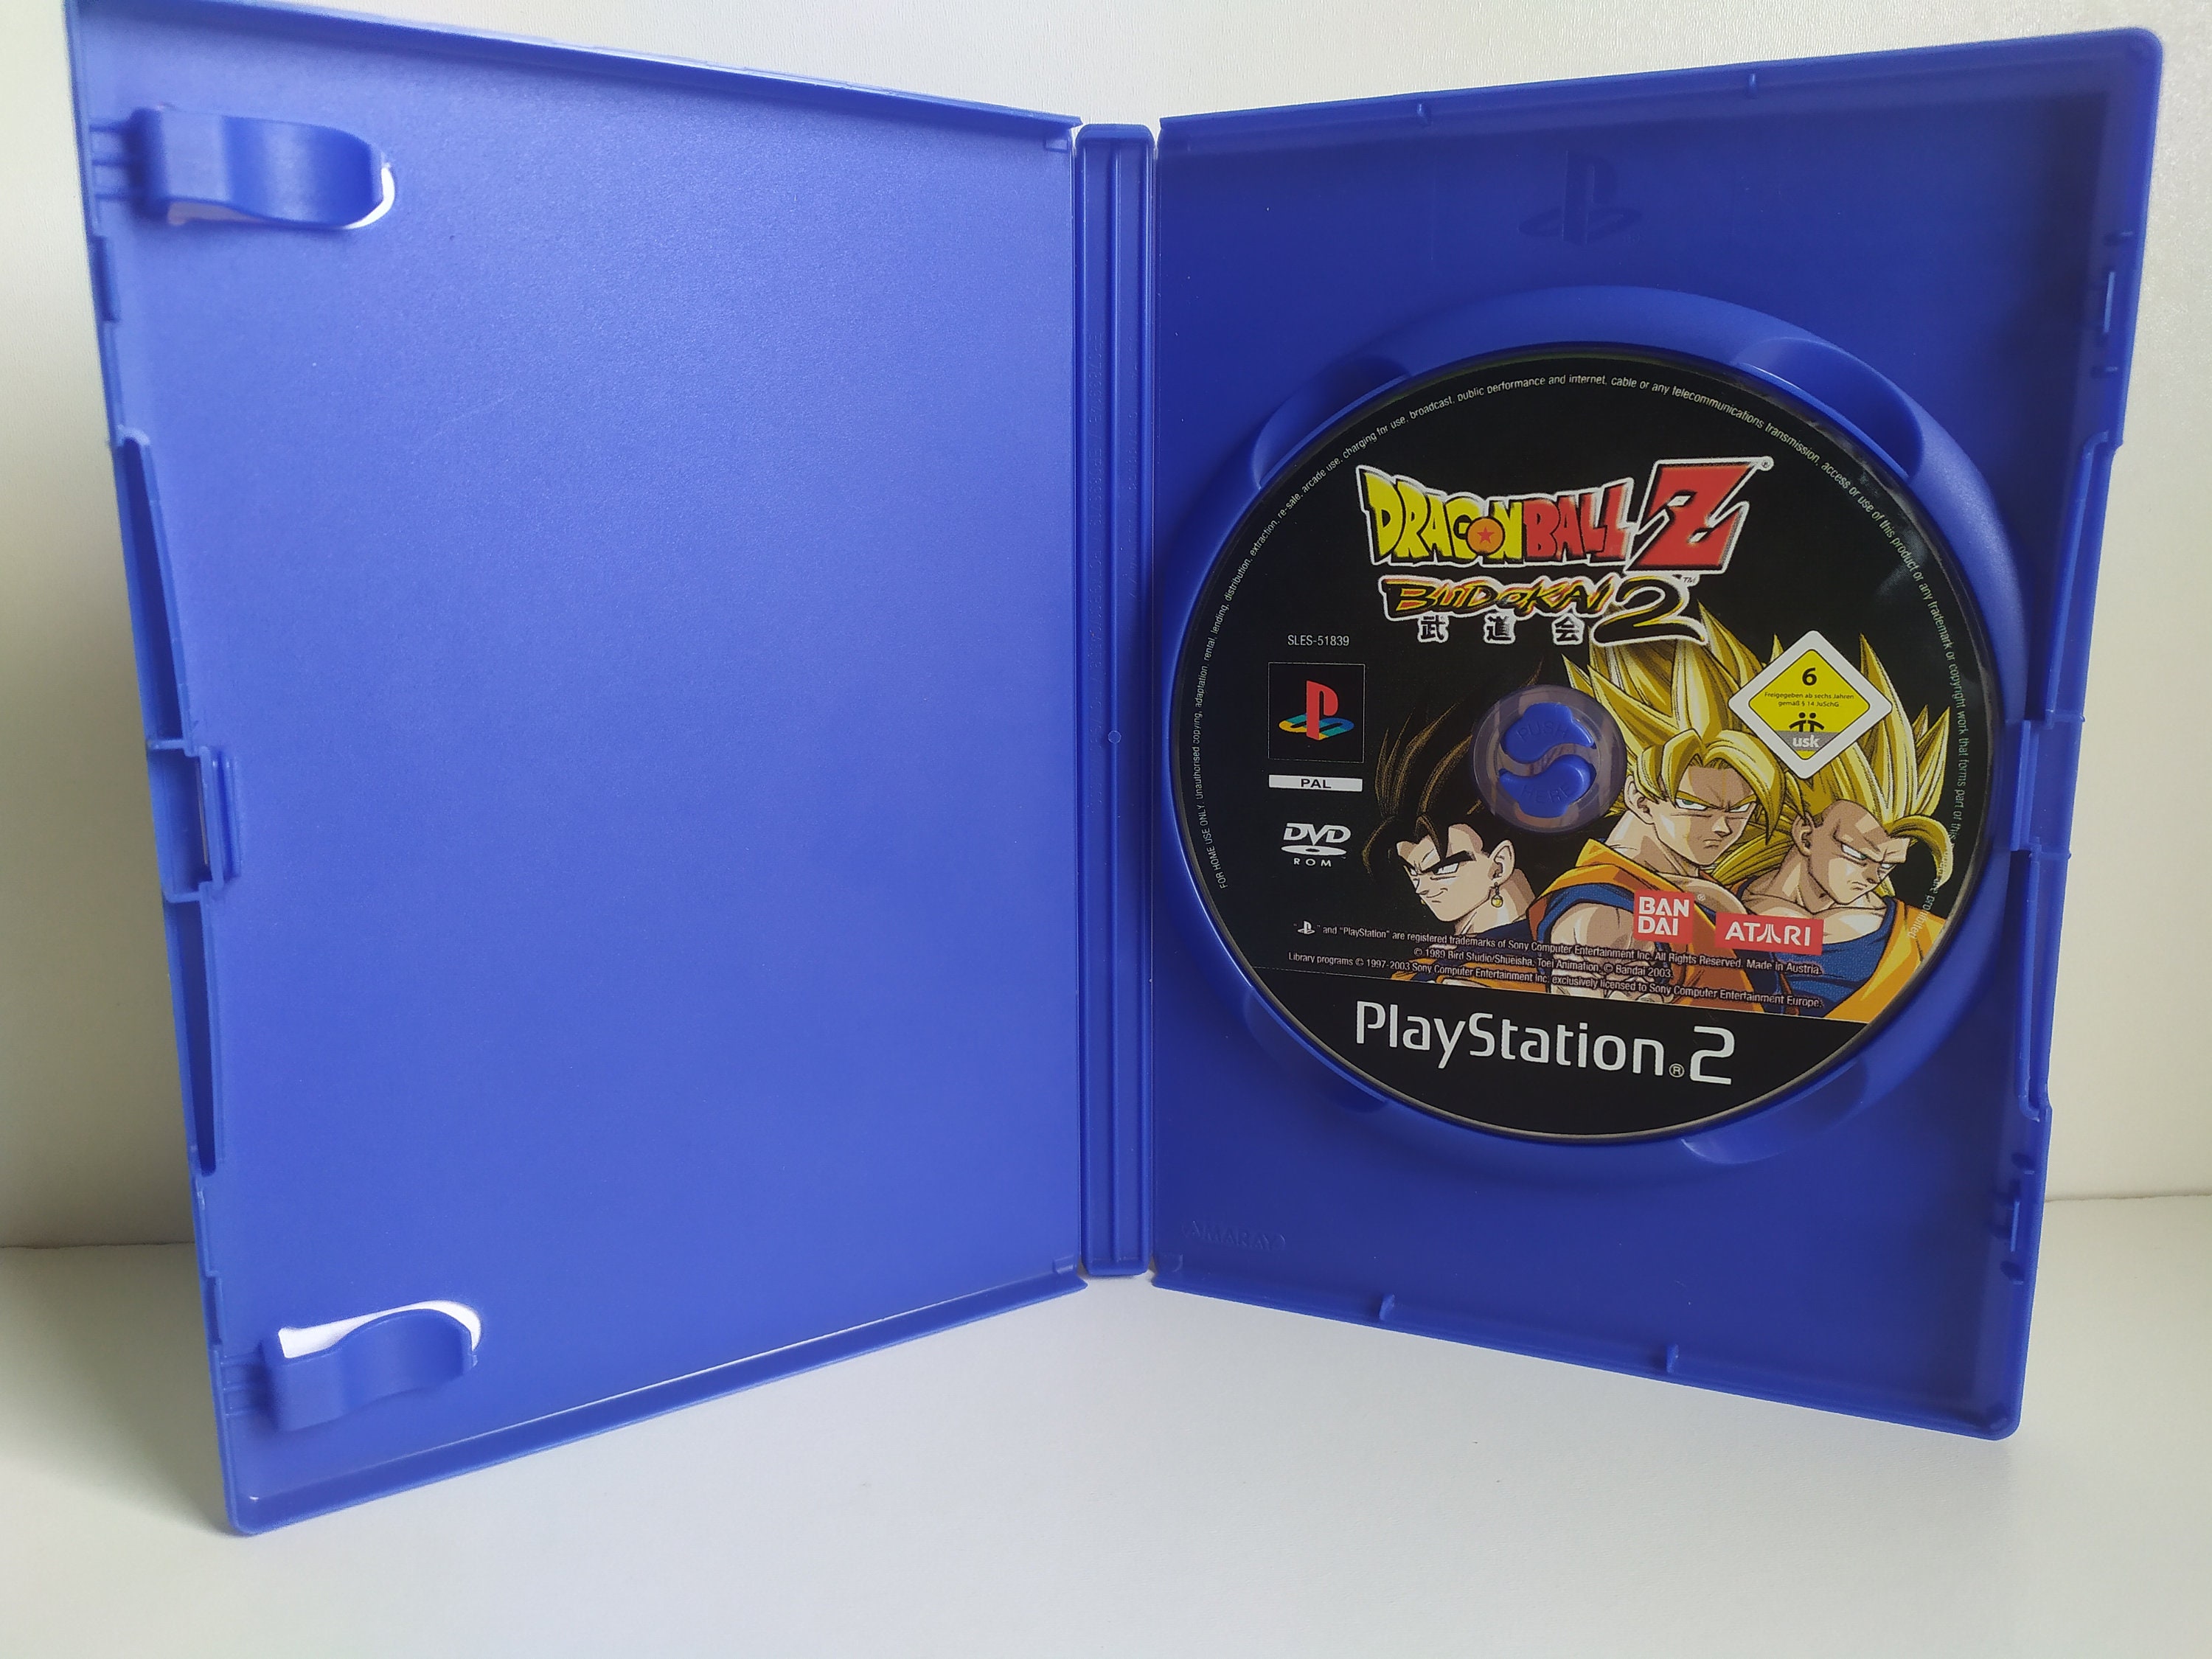 Dragon Ball Z Budokai 2 PS2 Game Playstation 2 For Sale